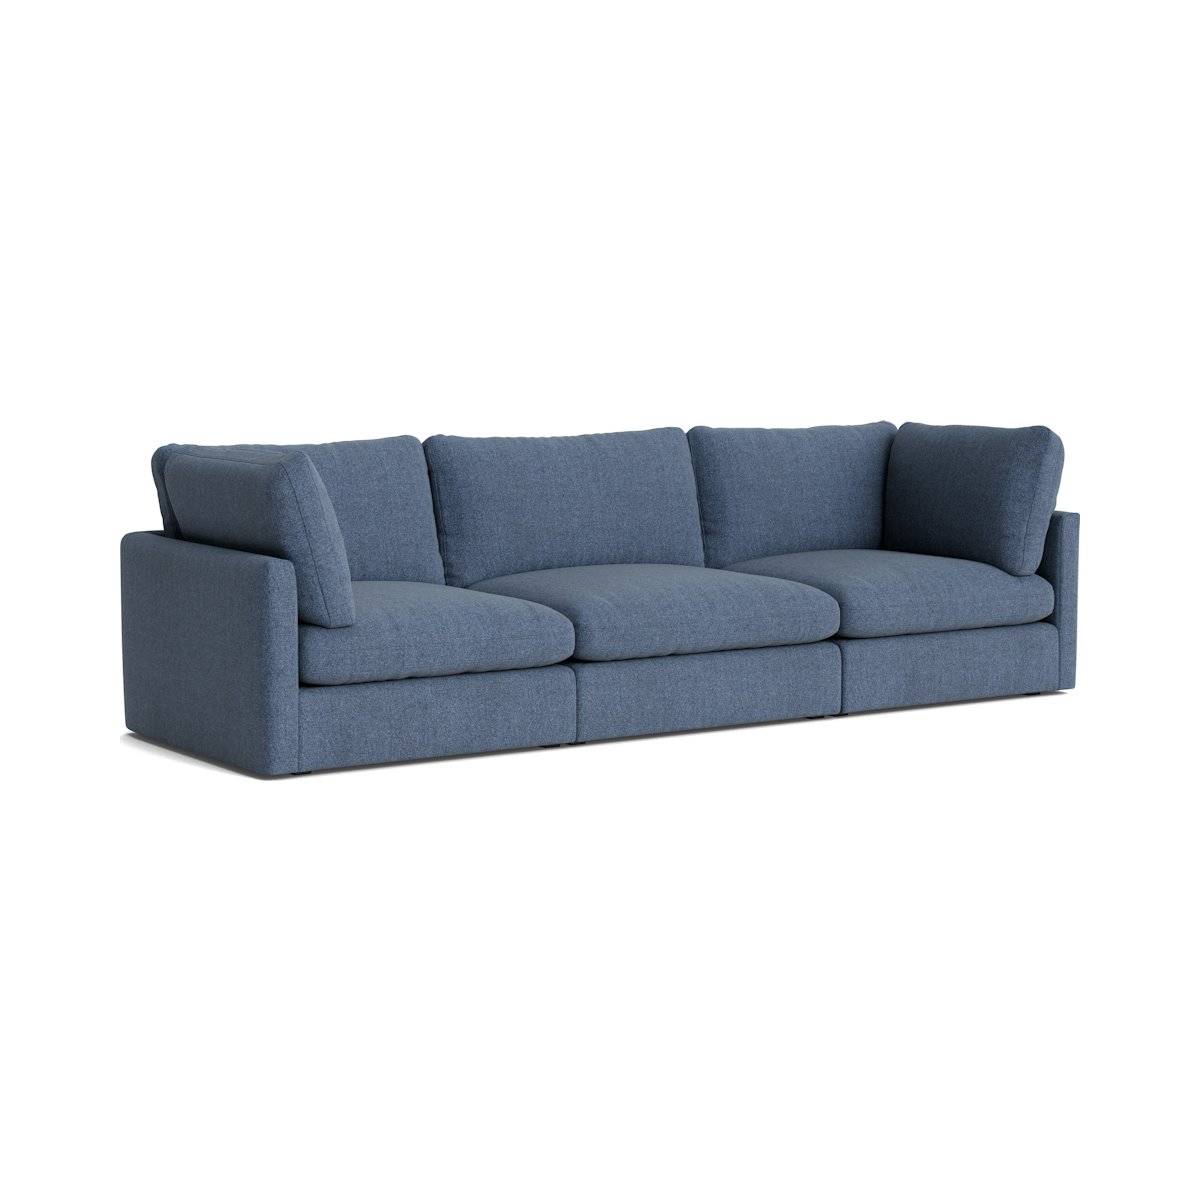 Hackney Lounge Compact 3-Seat Sofa